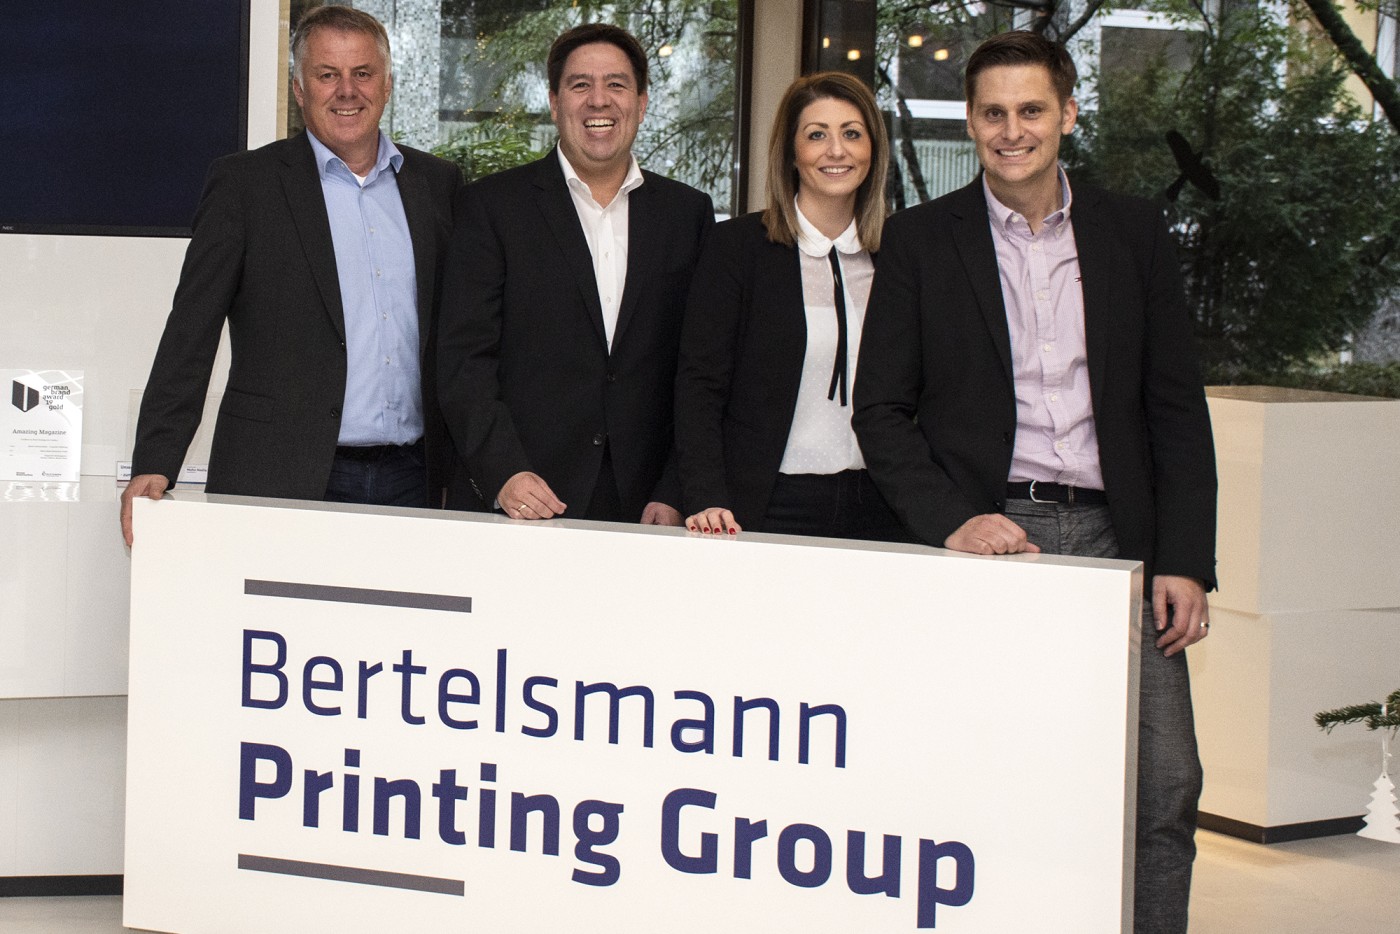 20191203_team_bertelsmann_printing_group